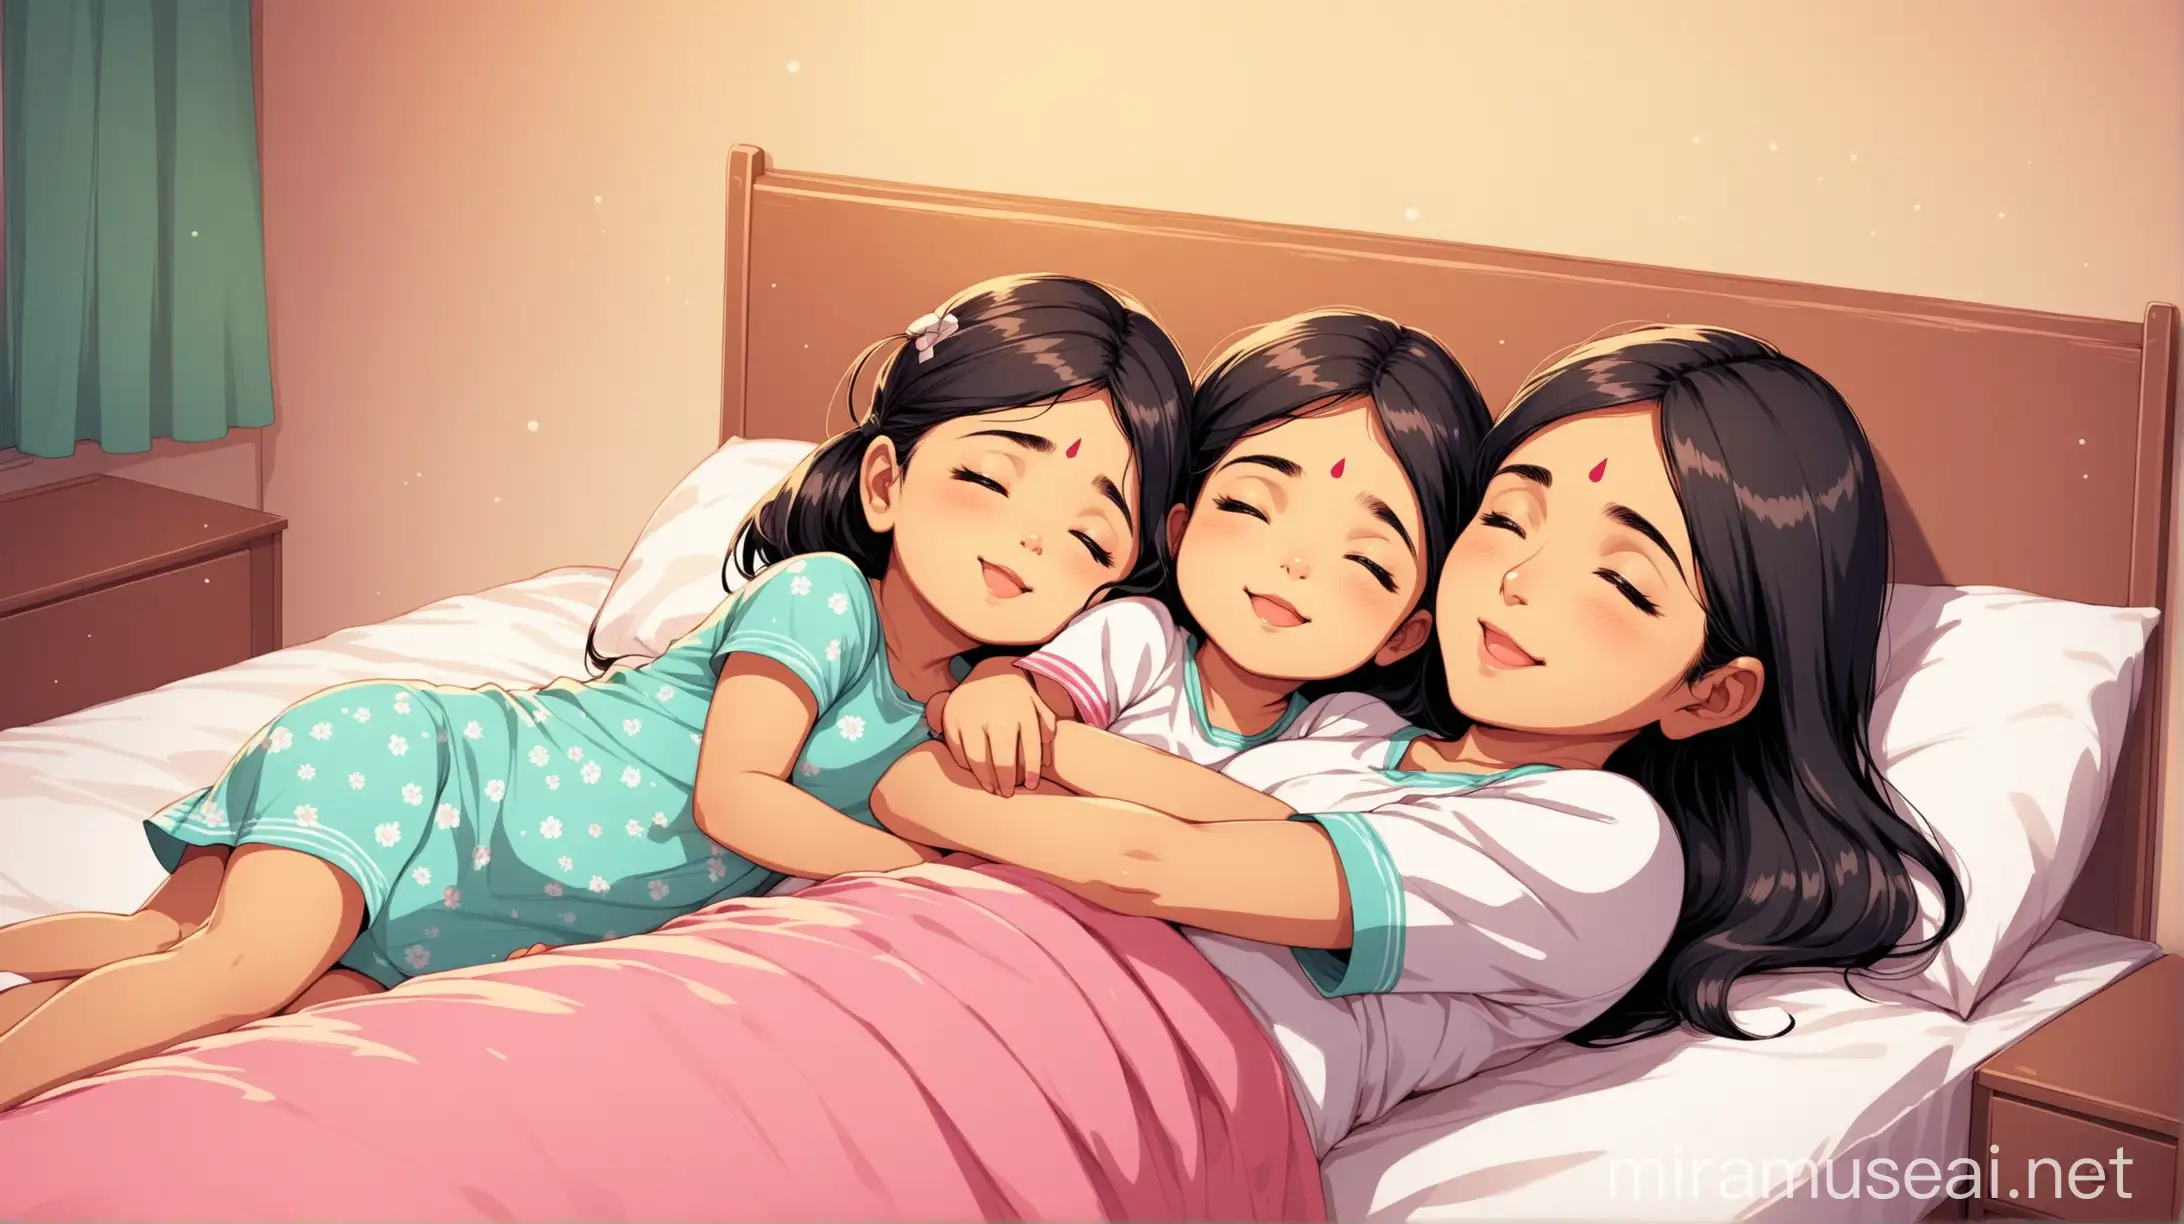 Joyful WakeUp Mother Rouses Sleeping Daughters in Bedroom